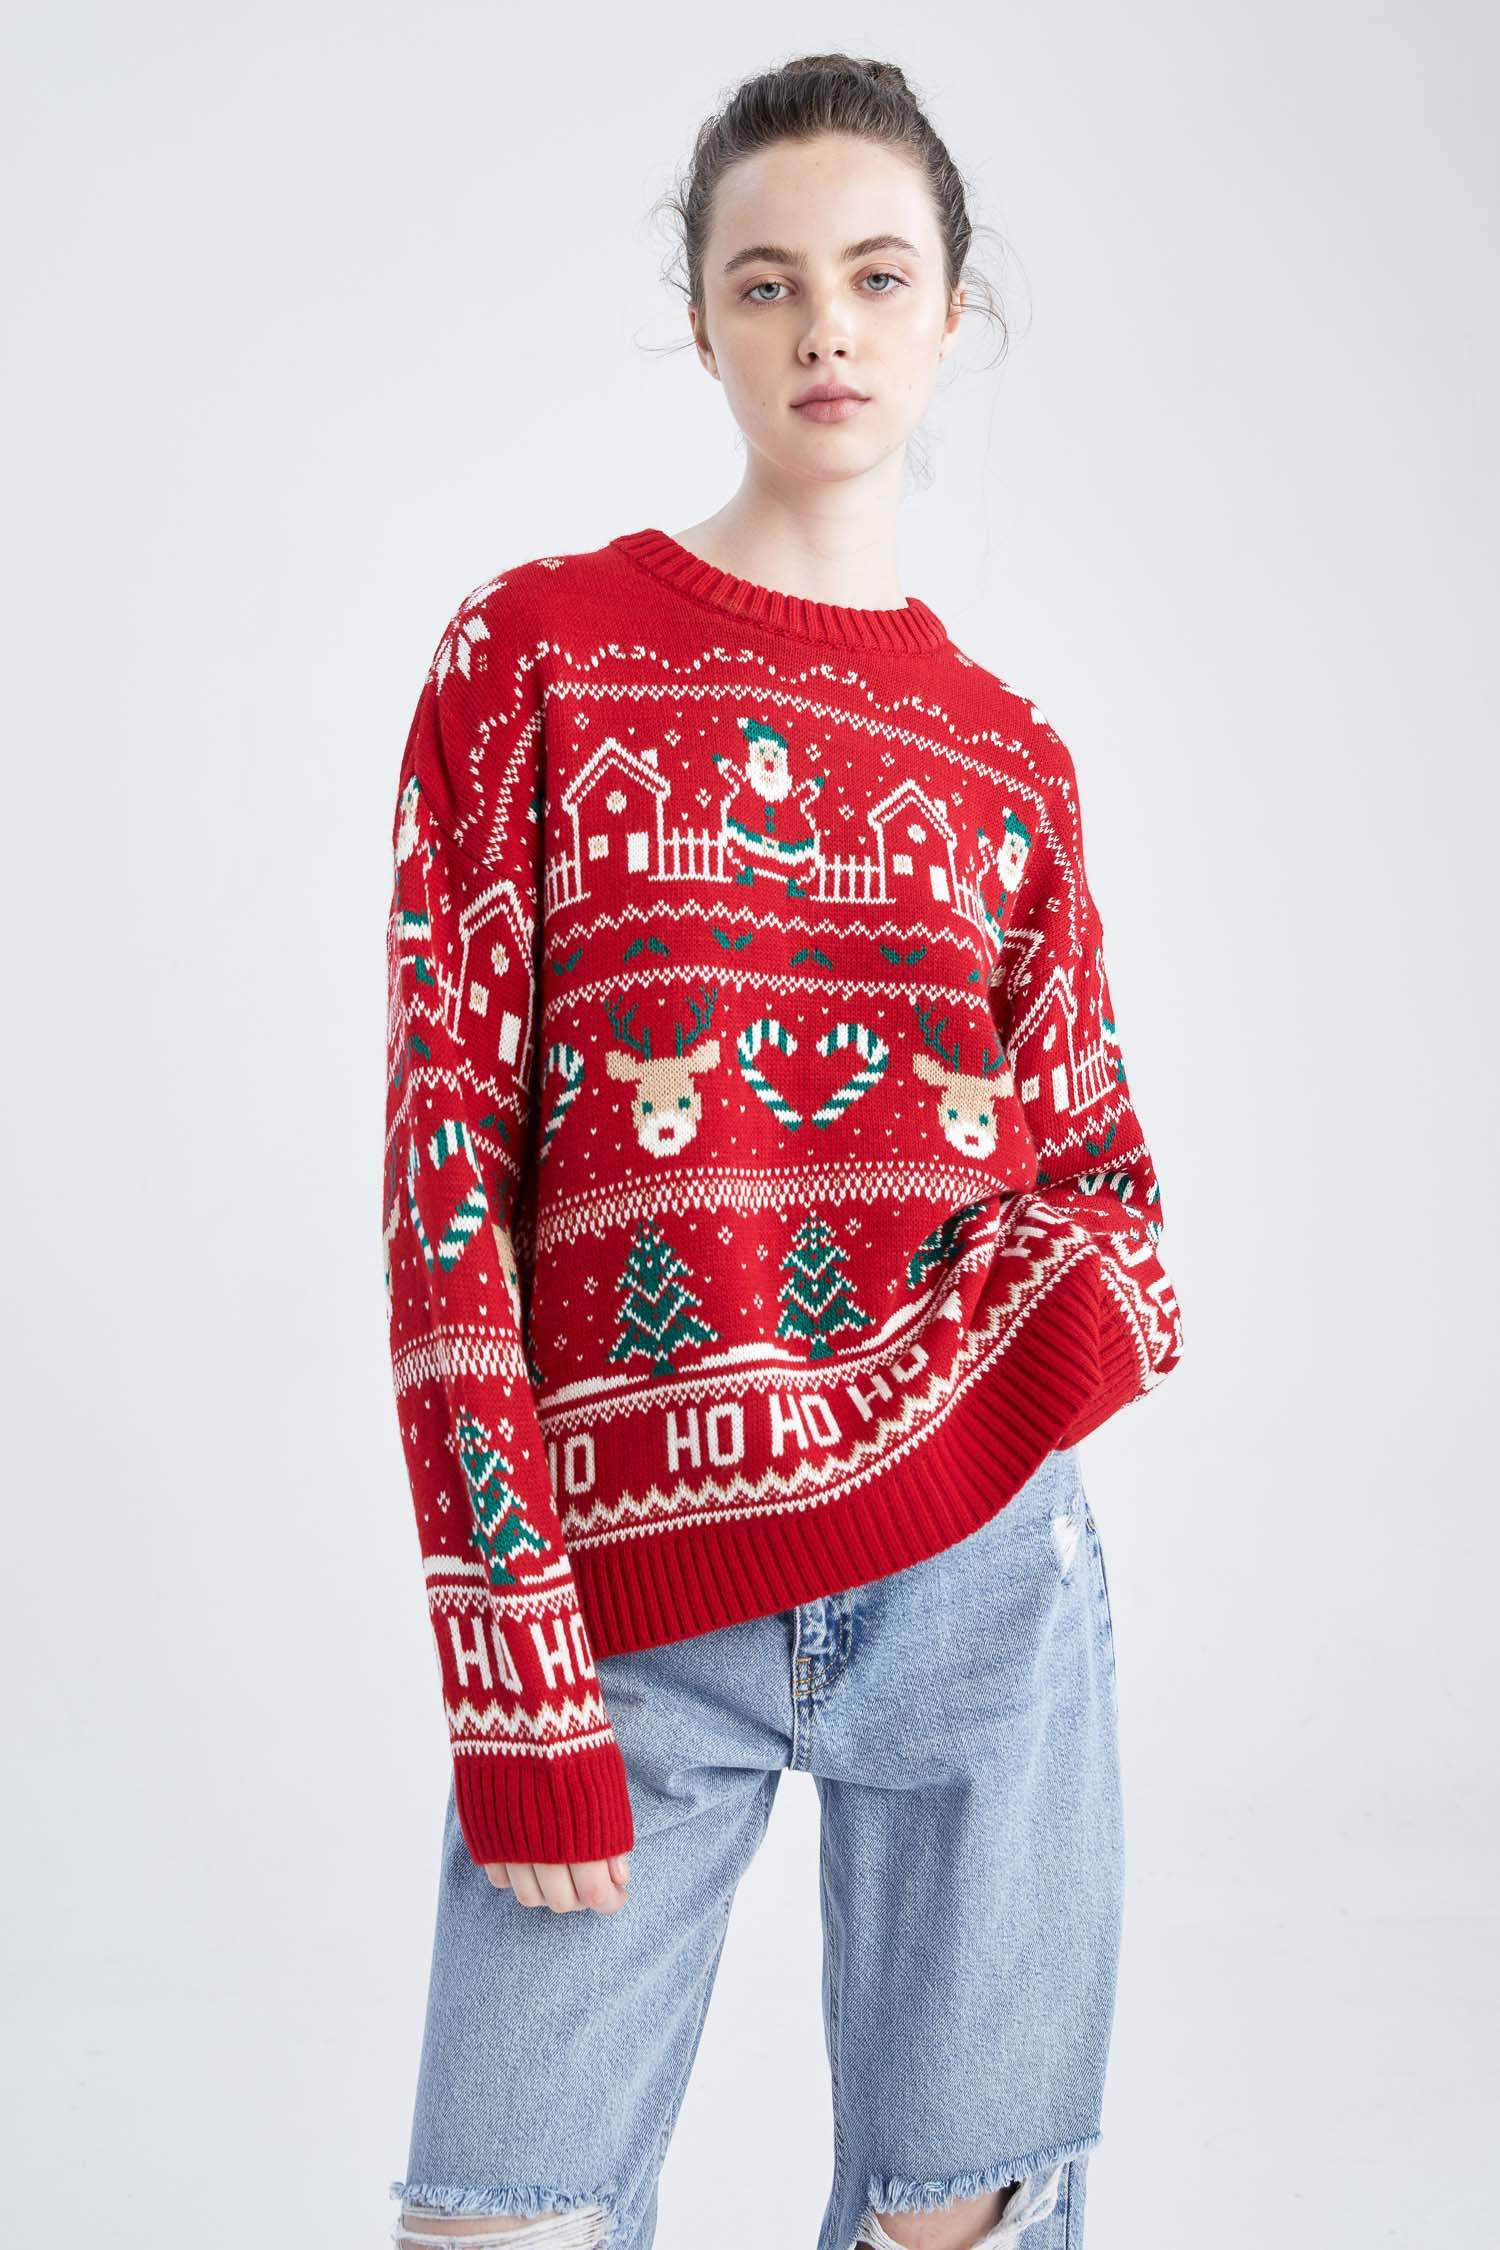 Women Sweatshirts Pullover Tops Christmas Snowman Crewneck Long Sleeve Jumper Sweater Casual Shirts Tunics Blouse 